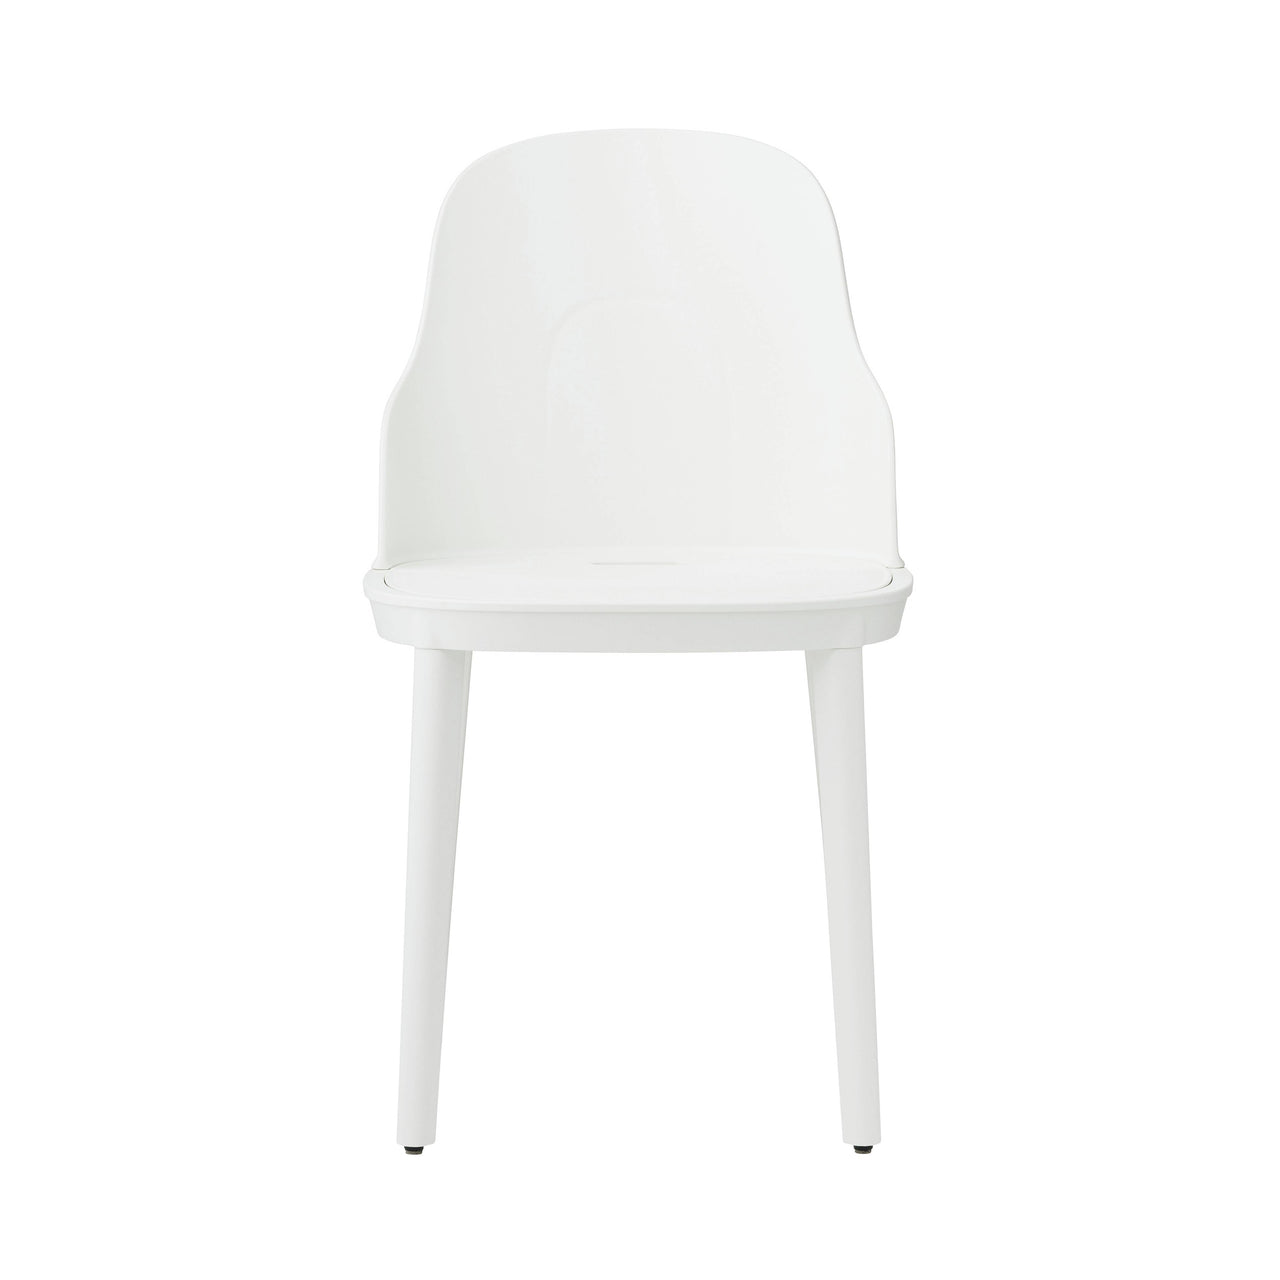 Allez Chair: White + Polypropylene